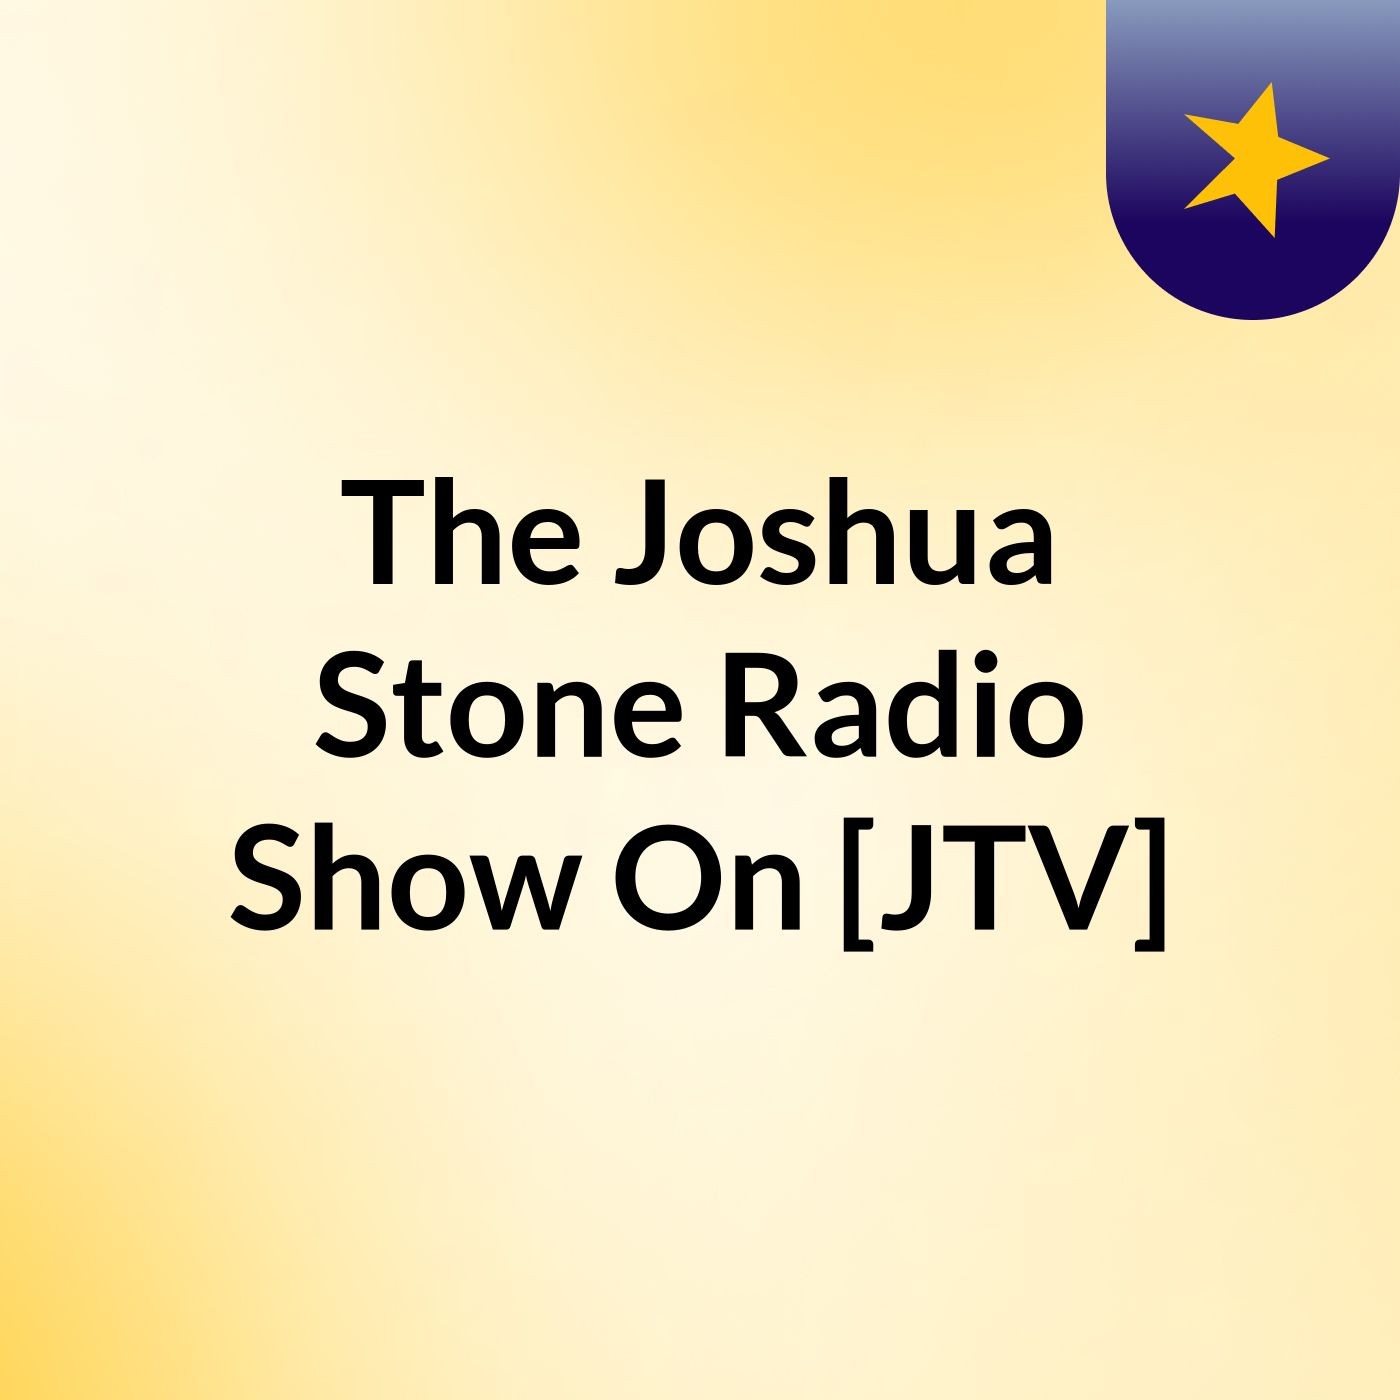 The Joshua Stone Radio Show On [JTV]